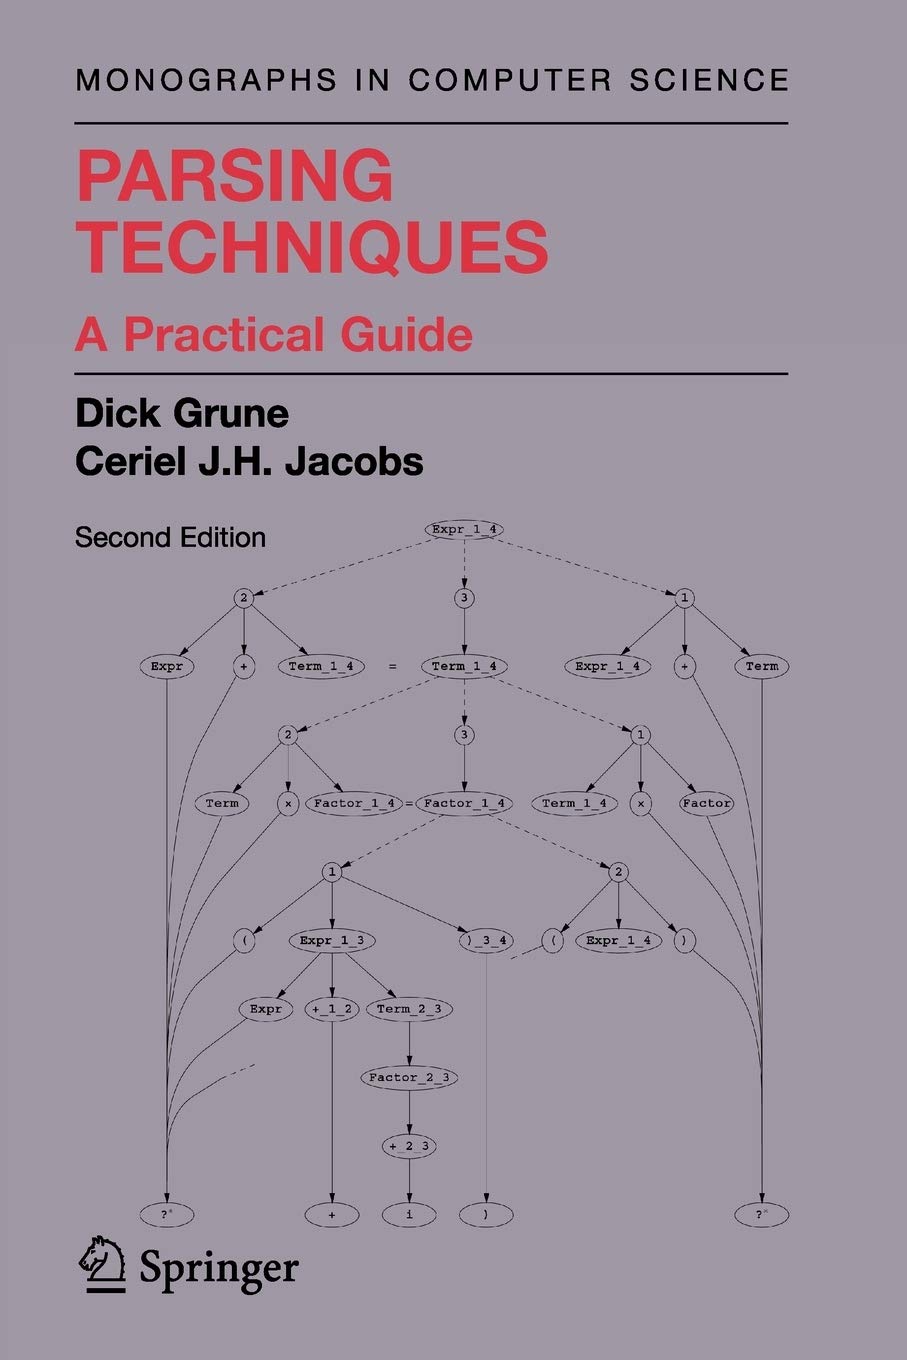 parsing techniques Dick Grune 2007